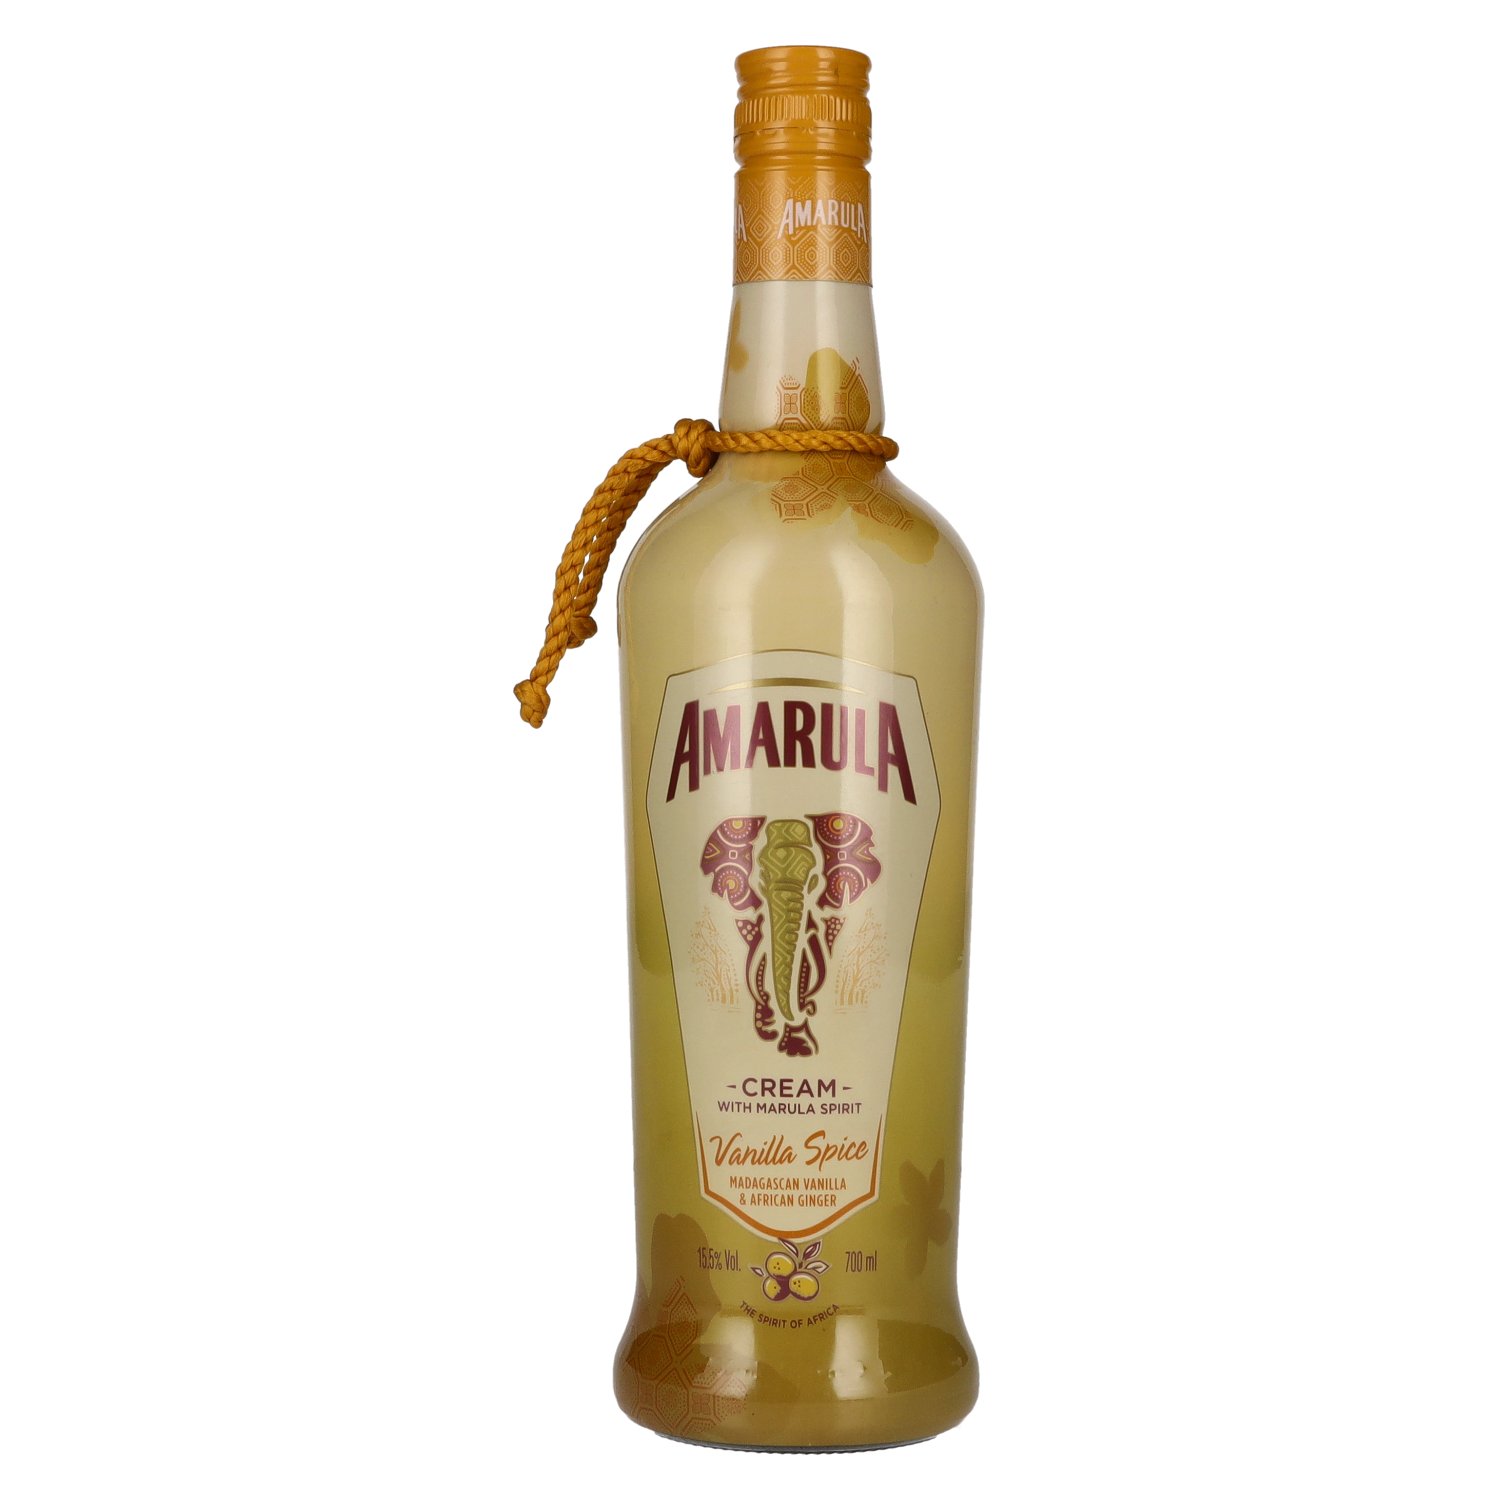 Spice delicando Vol. 15,5% Amarula Vanilla - 0,7l Cream